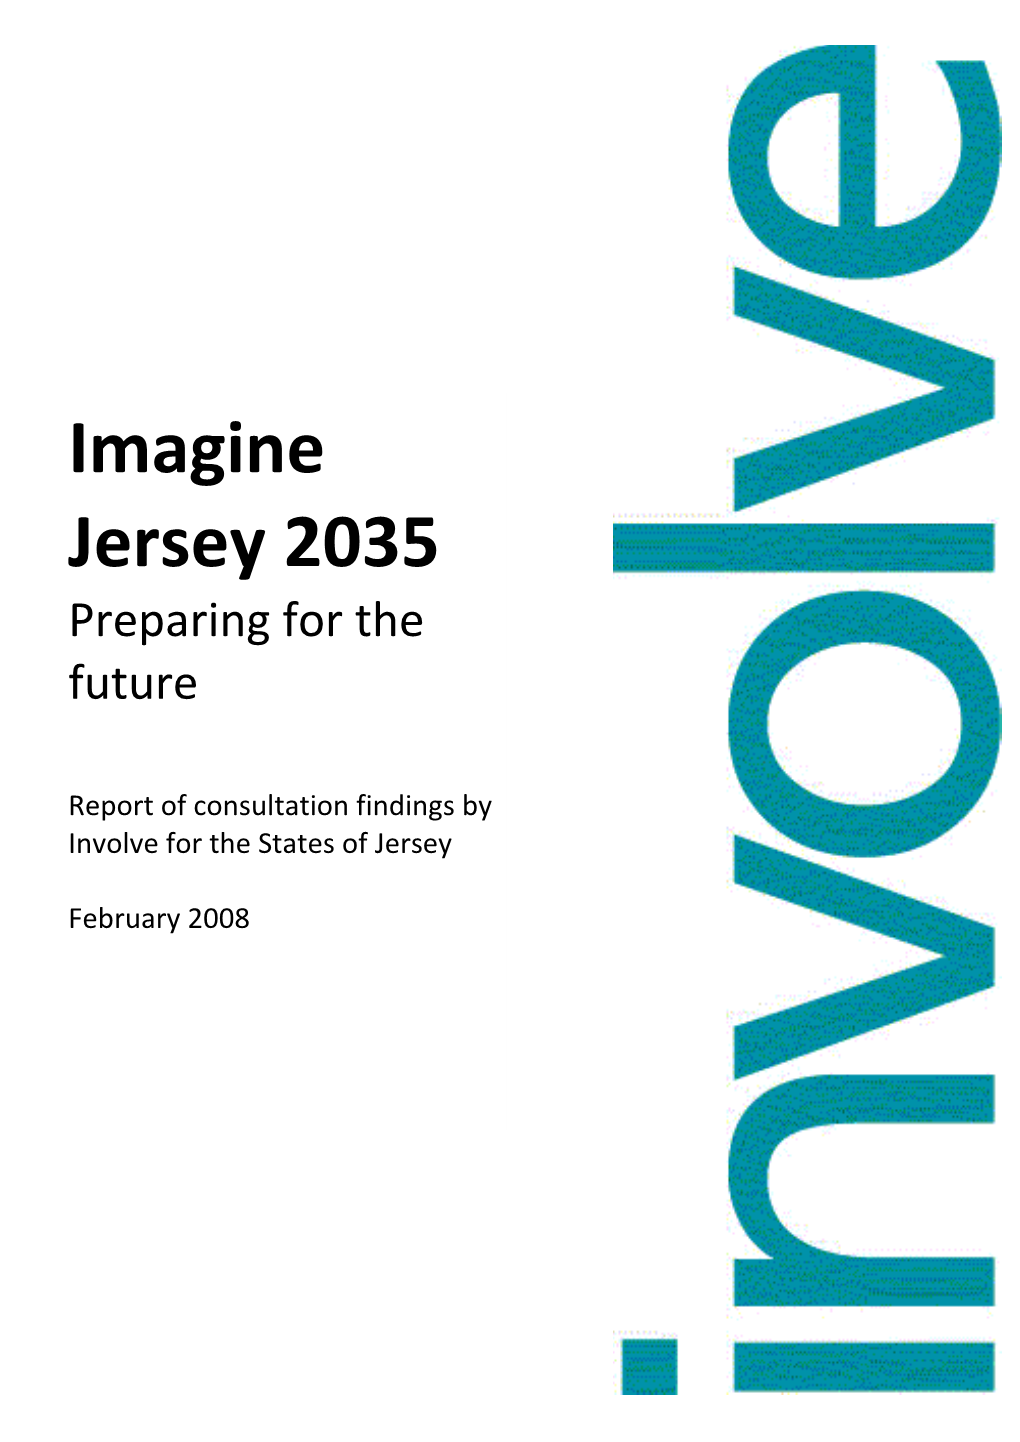 Imagine Jersey 2035 Consultation Process